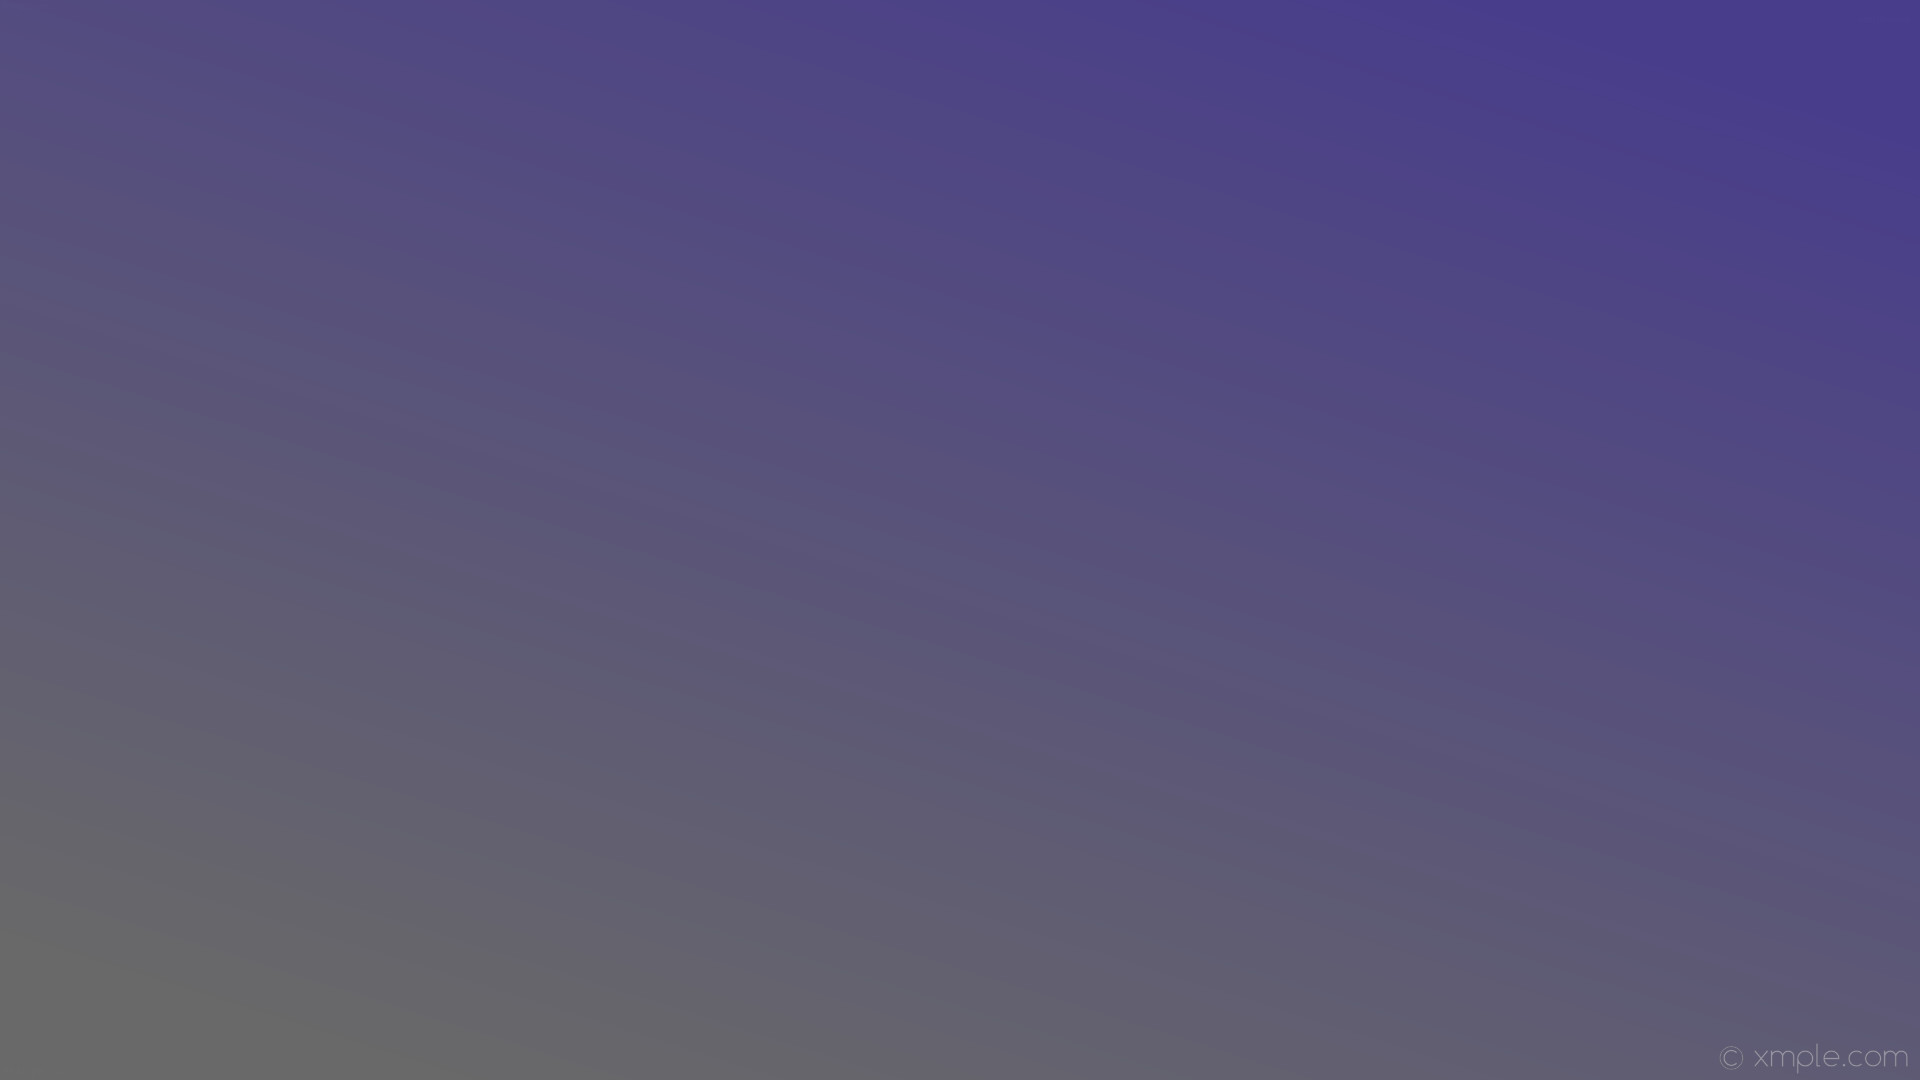 1920x1080 wallpaper grey gradient linear purple dark slate blue dim gray #483d8b  #696969 45Â°